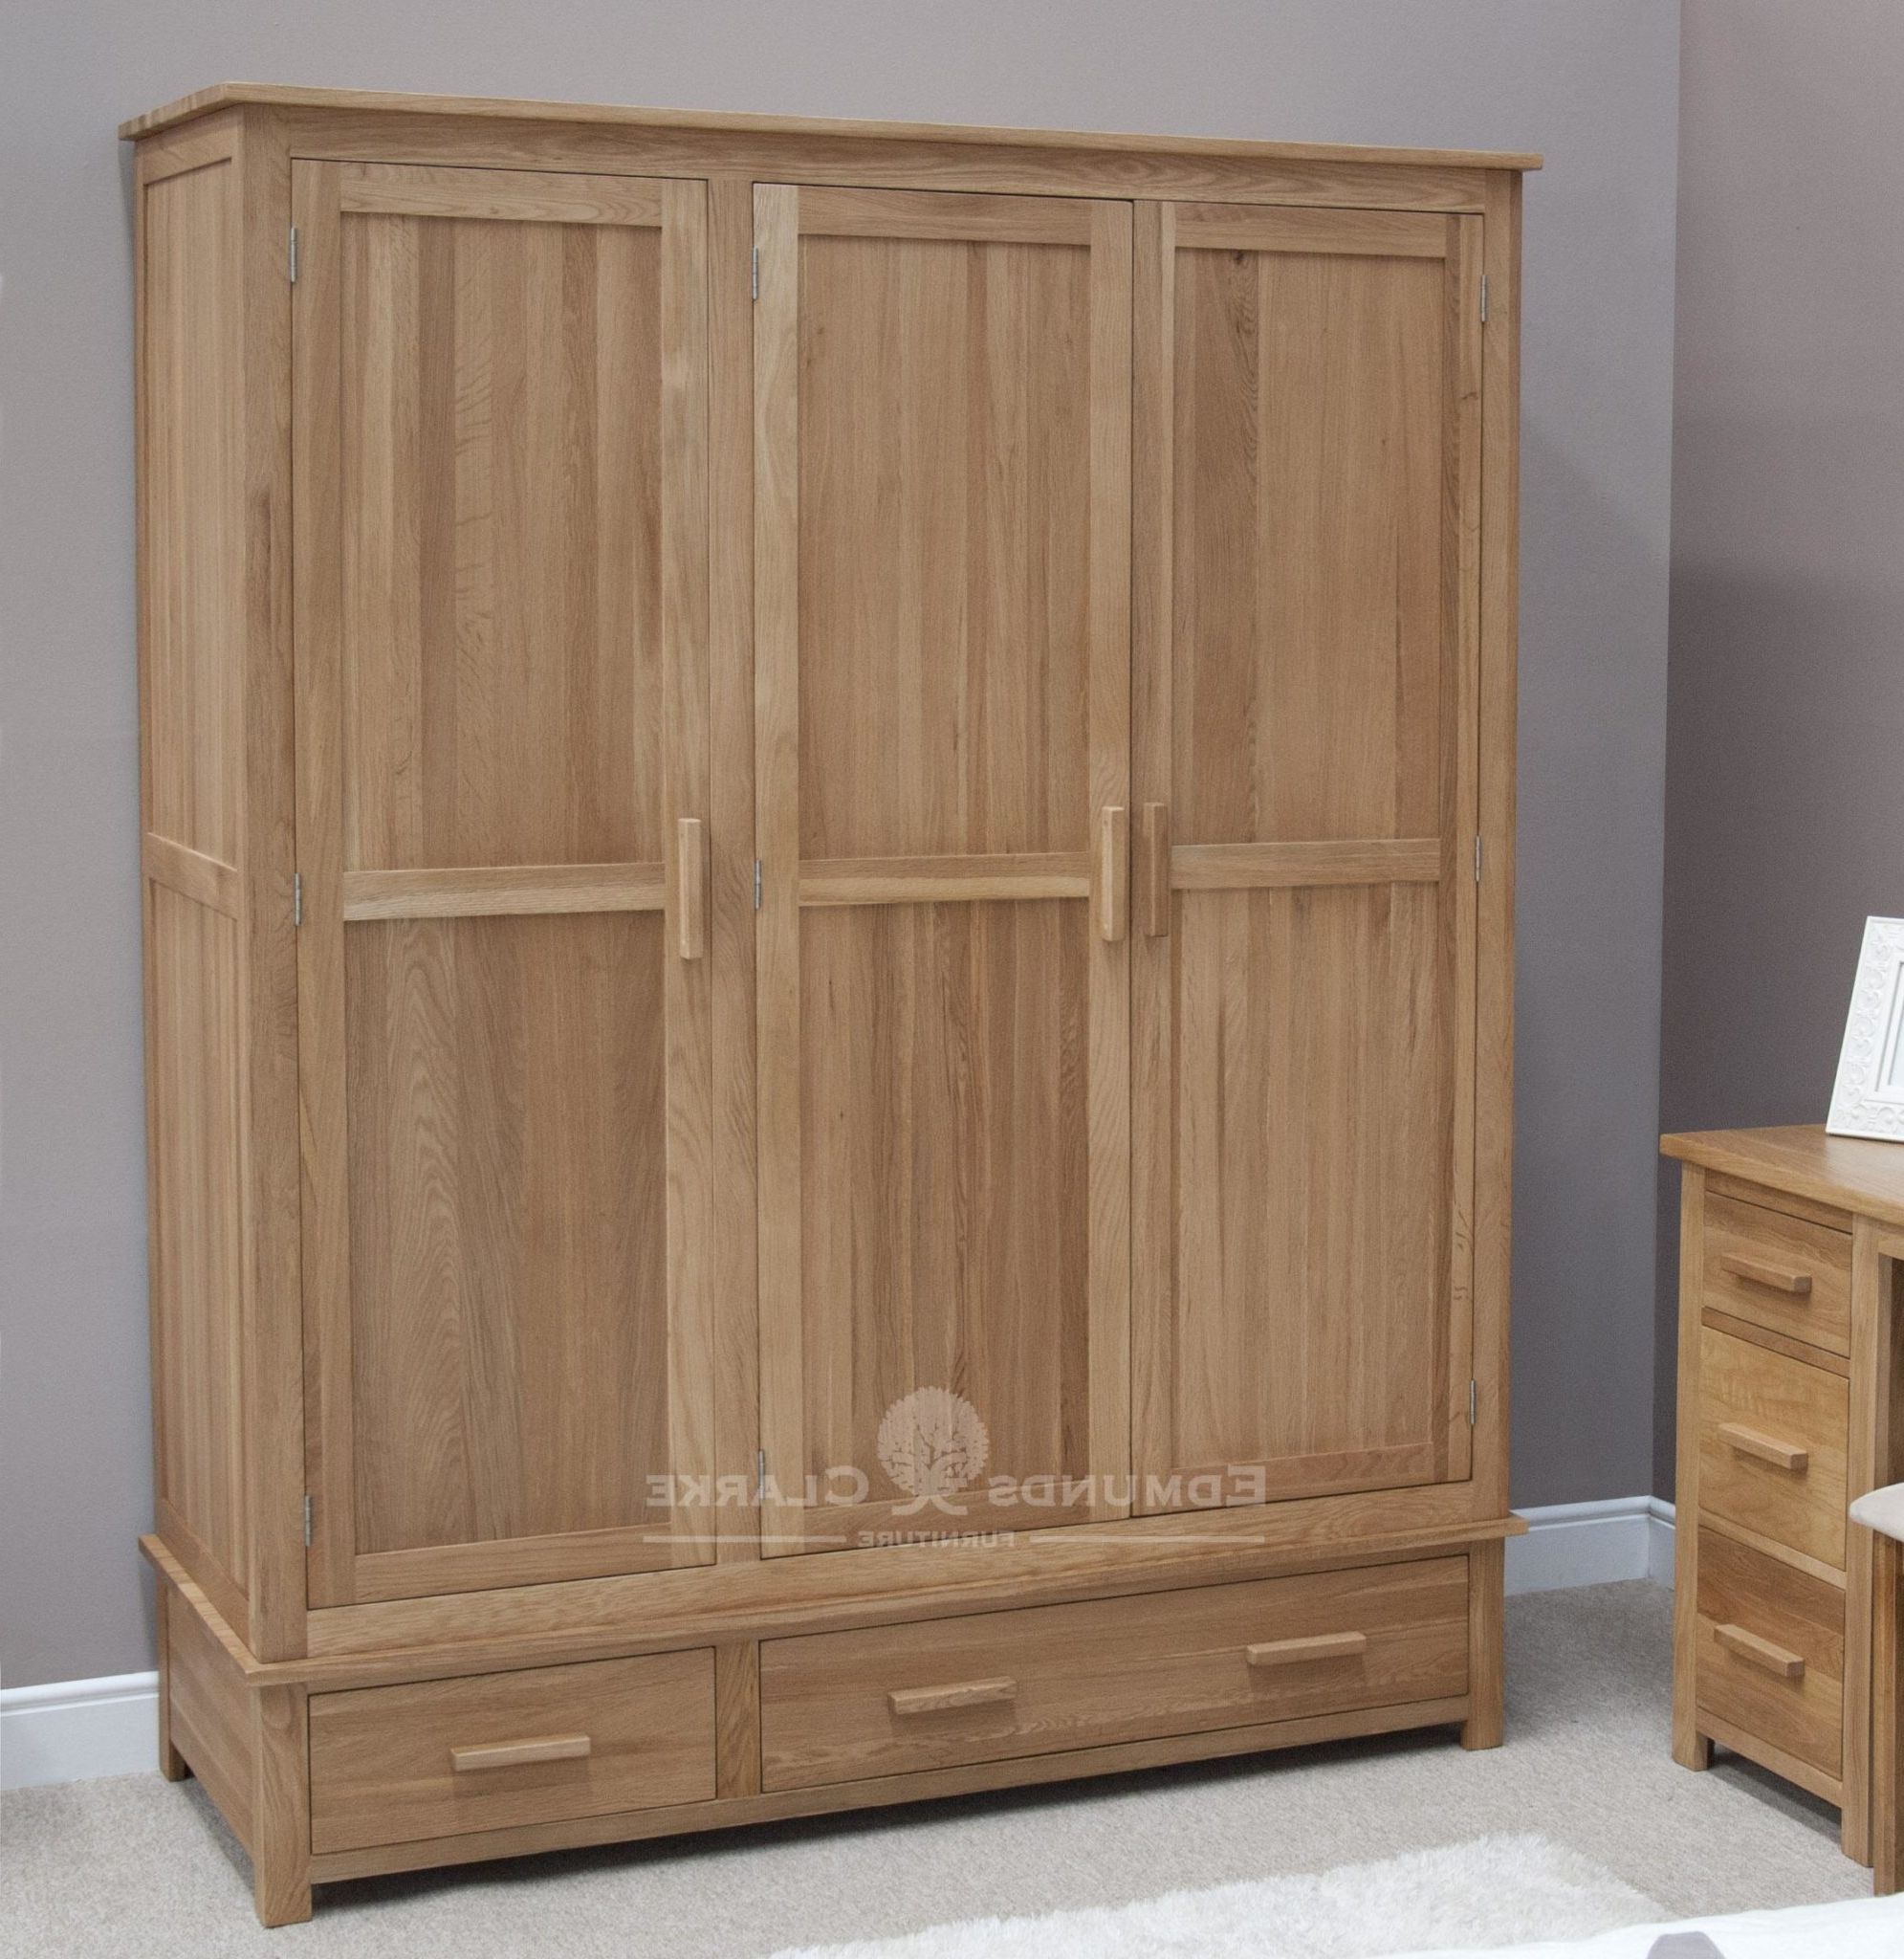 Bury Solid Oak 3 Door Wardrobe With Drawers | Edmunds & Clarke Ltd With Regard To Triple Oak Wardrobes (Gallery 9 of 20)